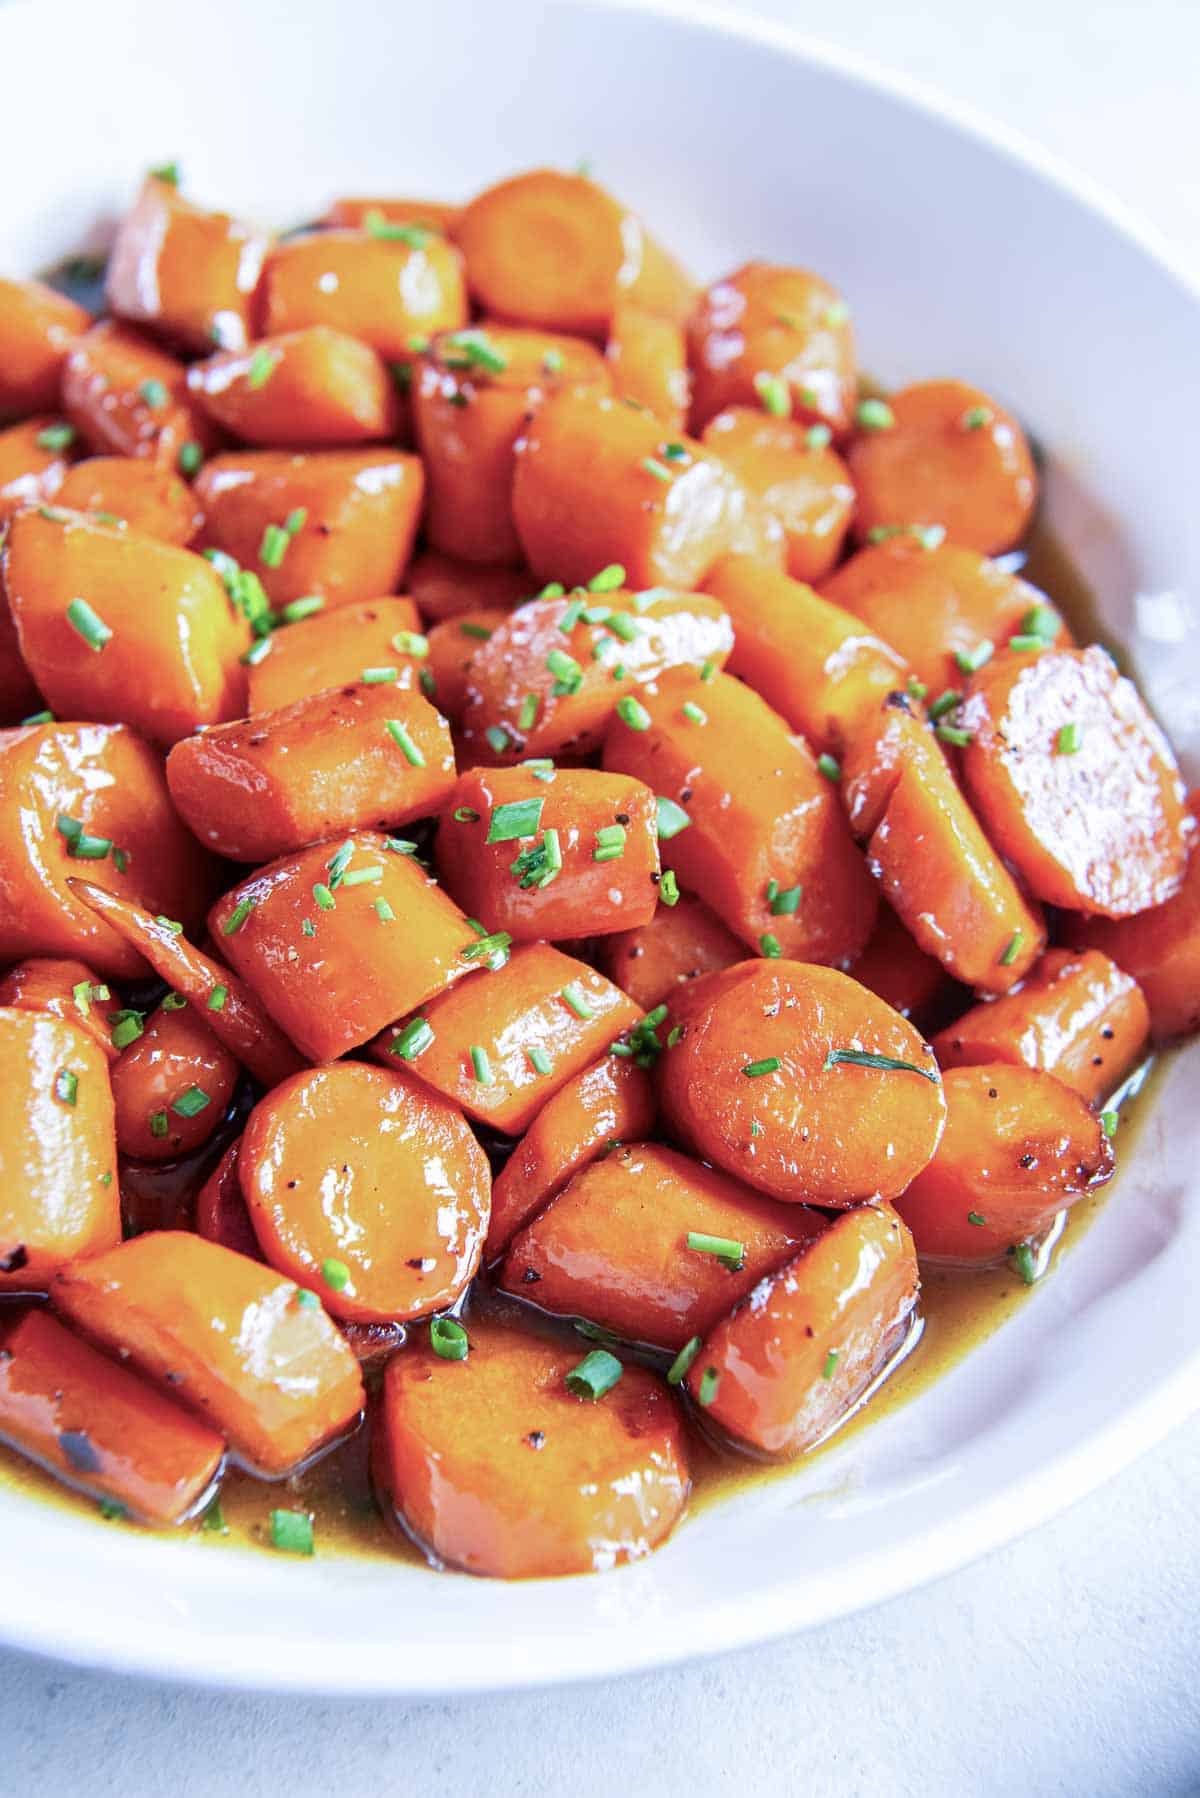 Bourbon glazed carrots in a white serving bowl.